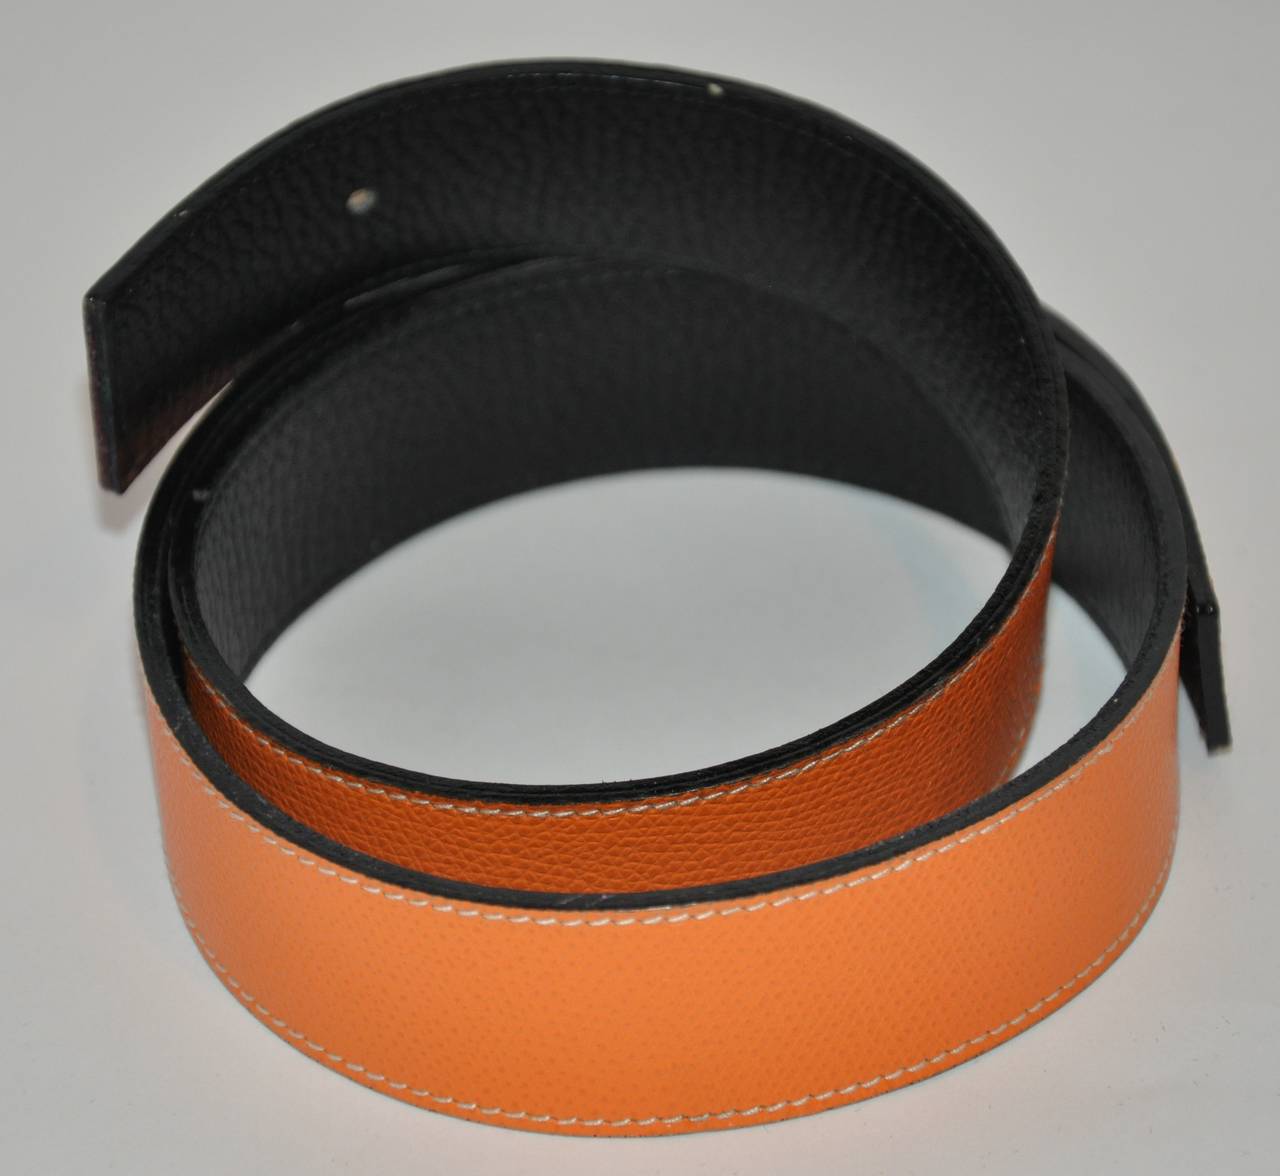 Hermes textured iconic tangerine with black interior calfskin belt for interchangable buckles measures 1 1/4